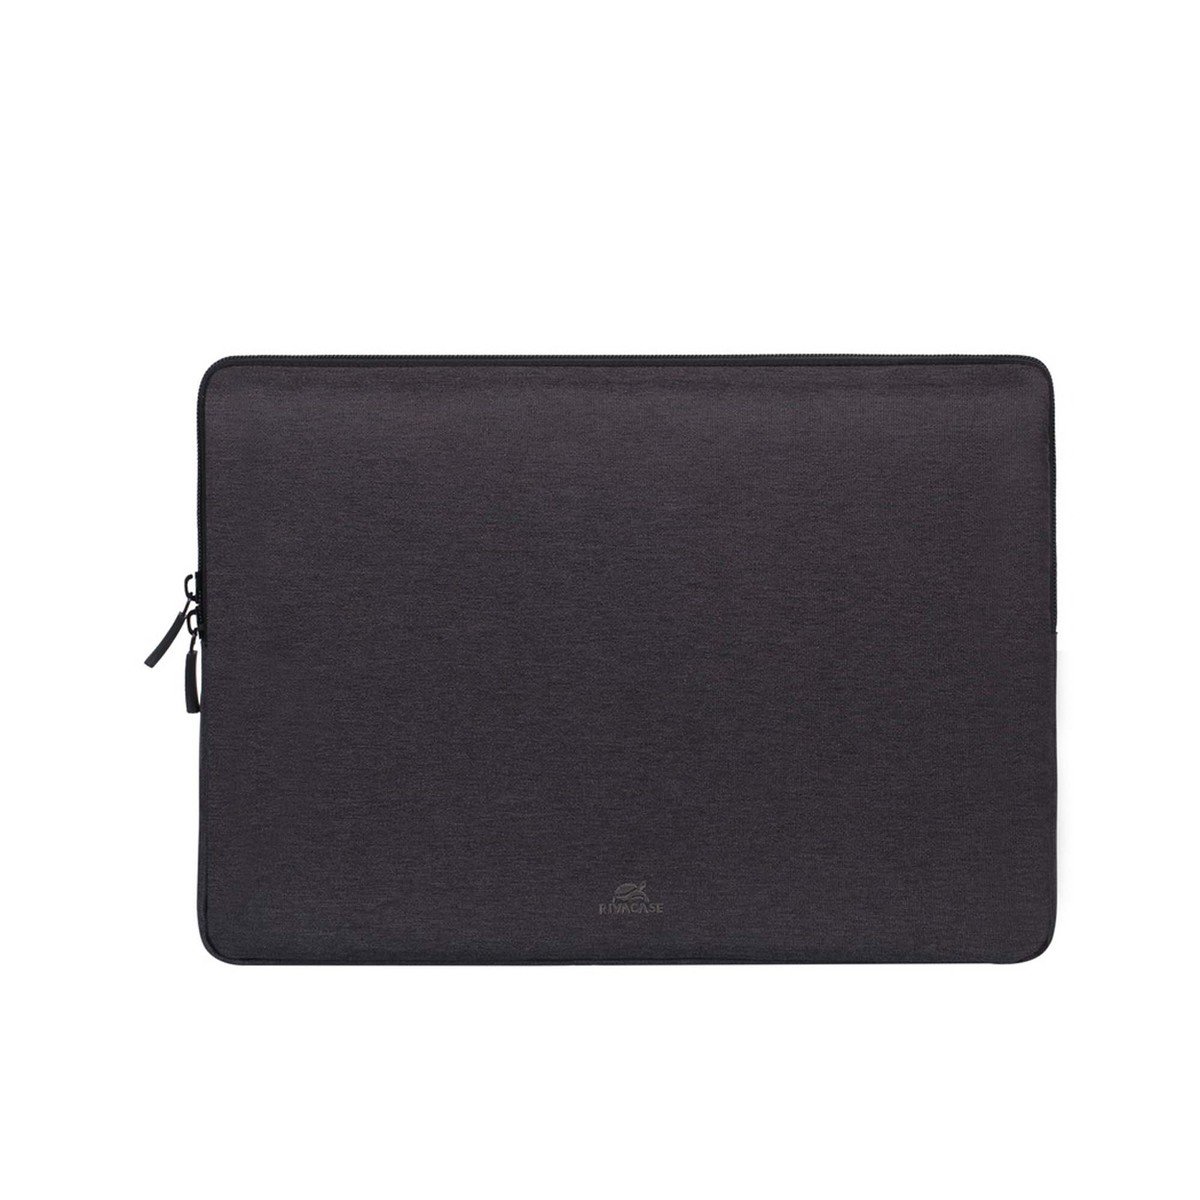 Rivacase Macbook Case7704 14 inch Black